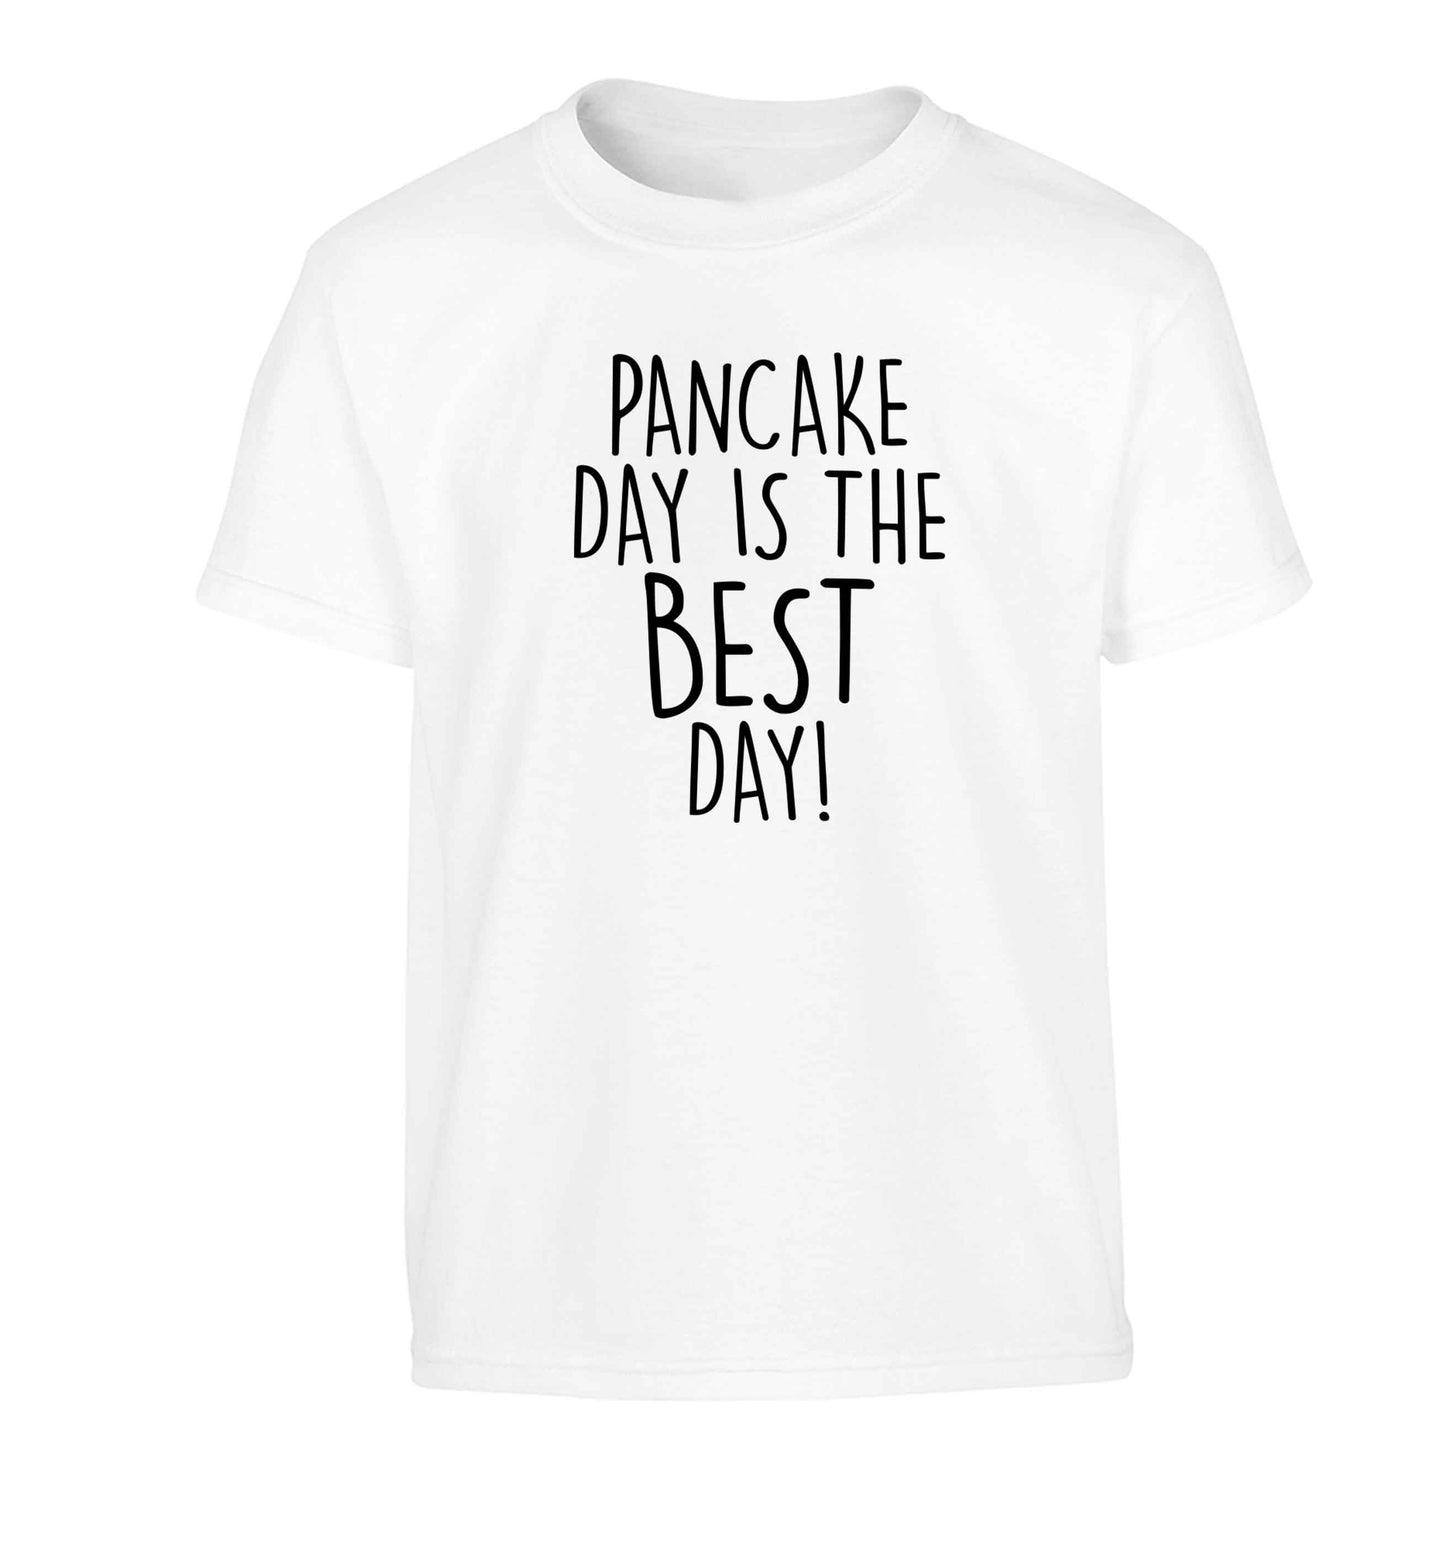 Pancake day is the best day Children's white Tshirt 12-13 Years